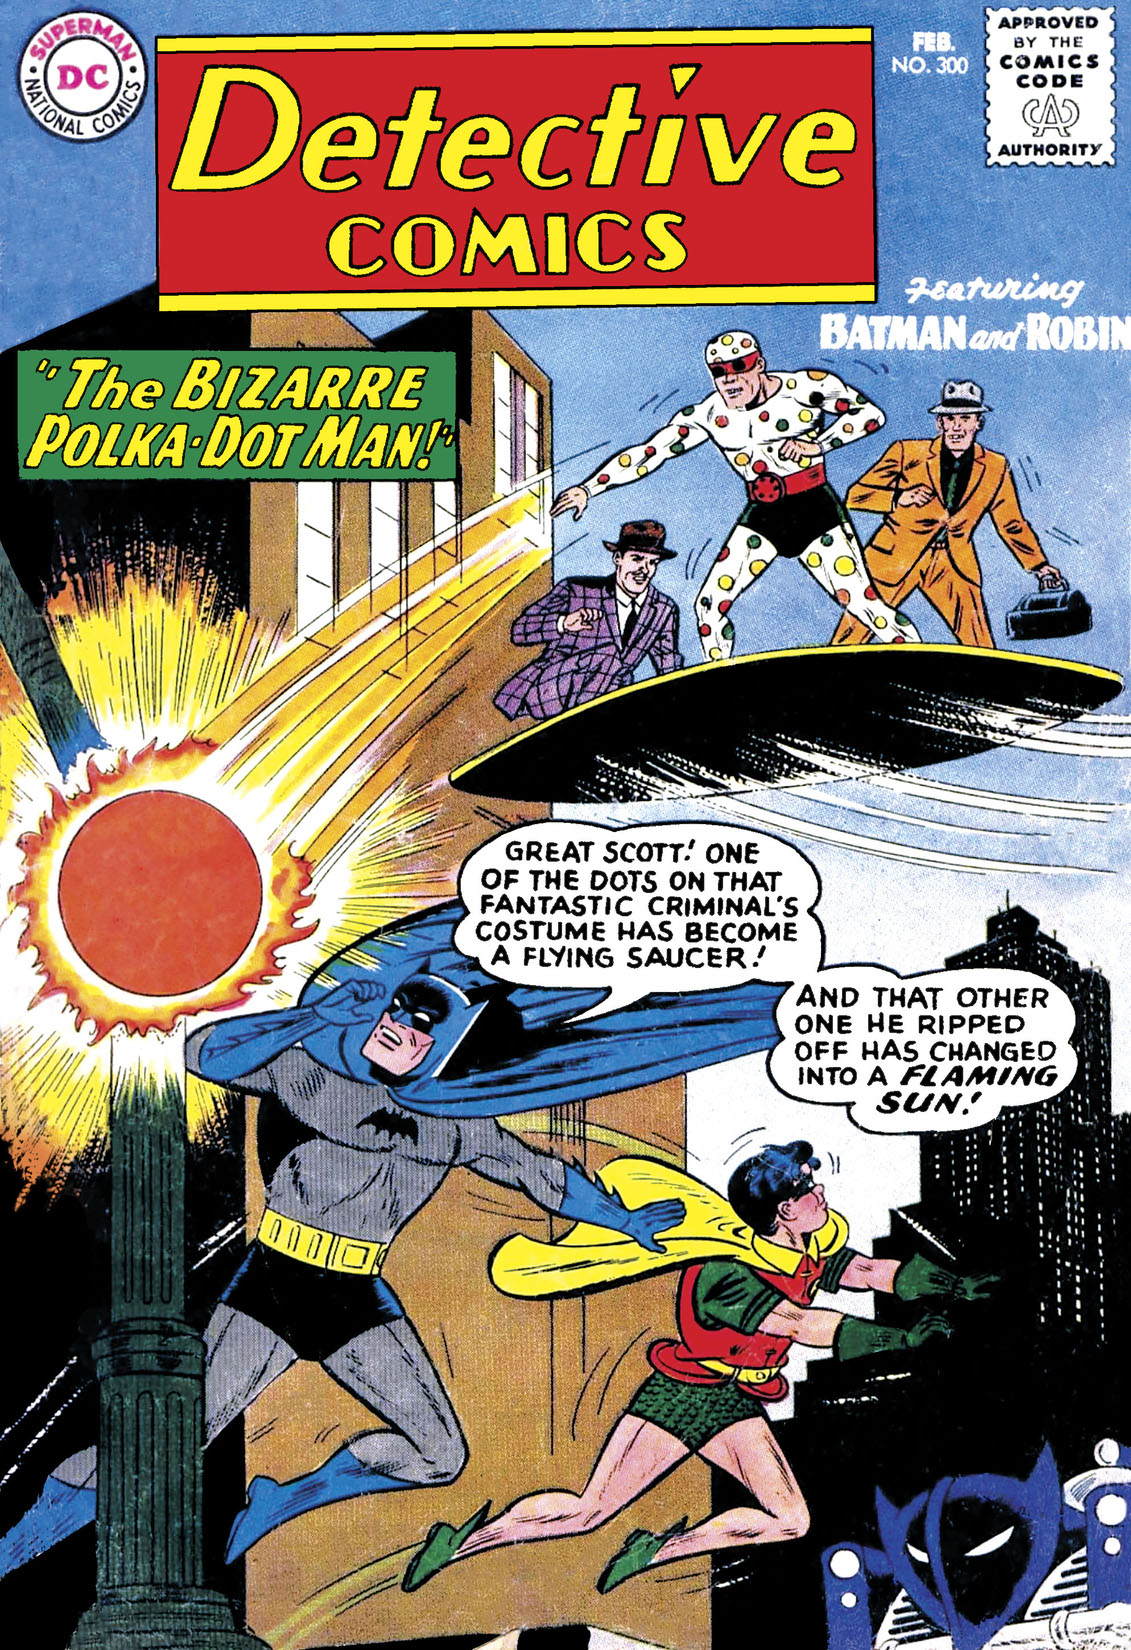 Detective Comics (1937-) #300 preview images